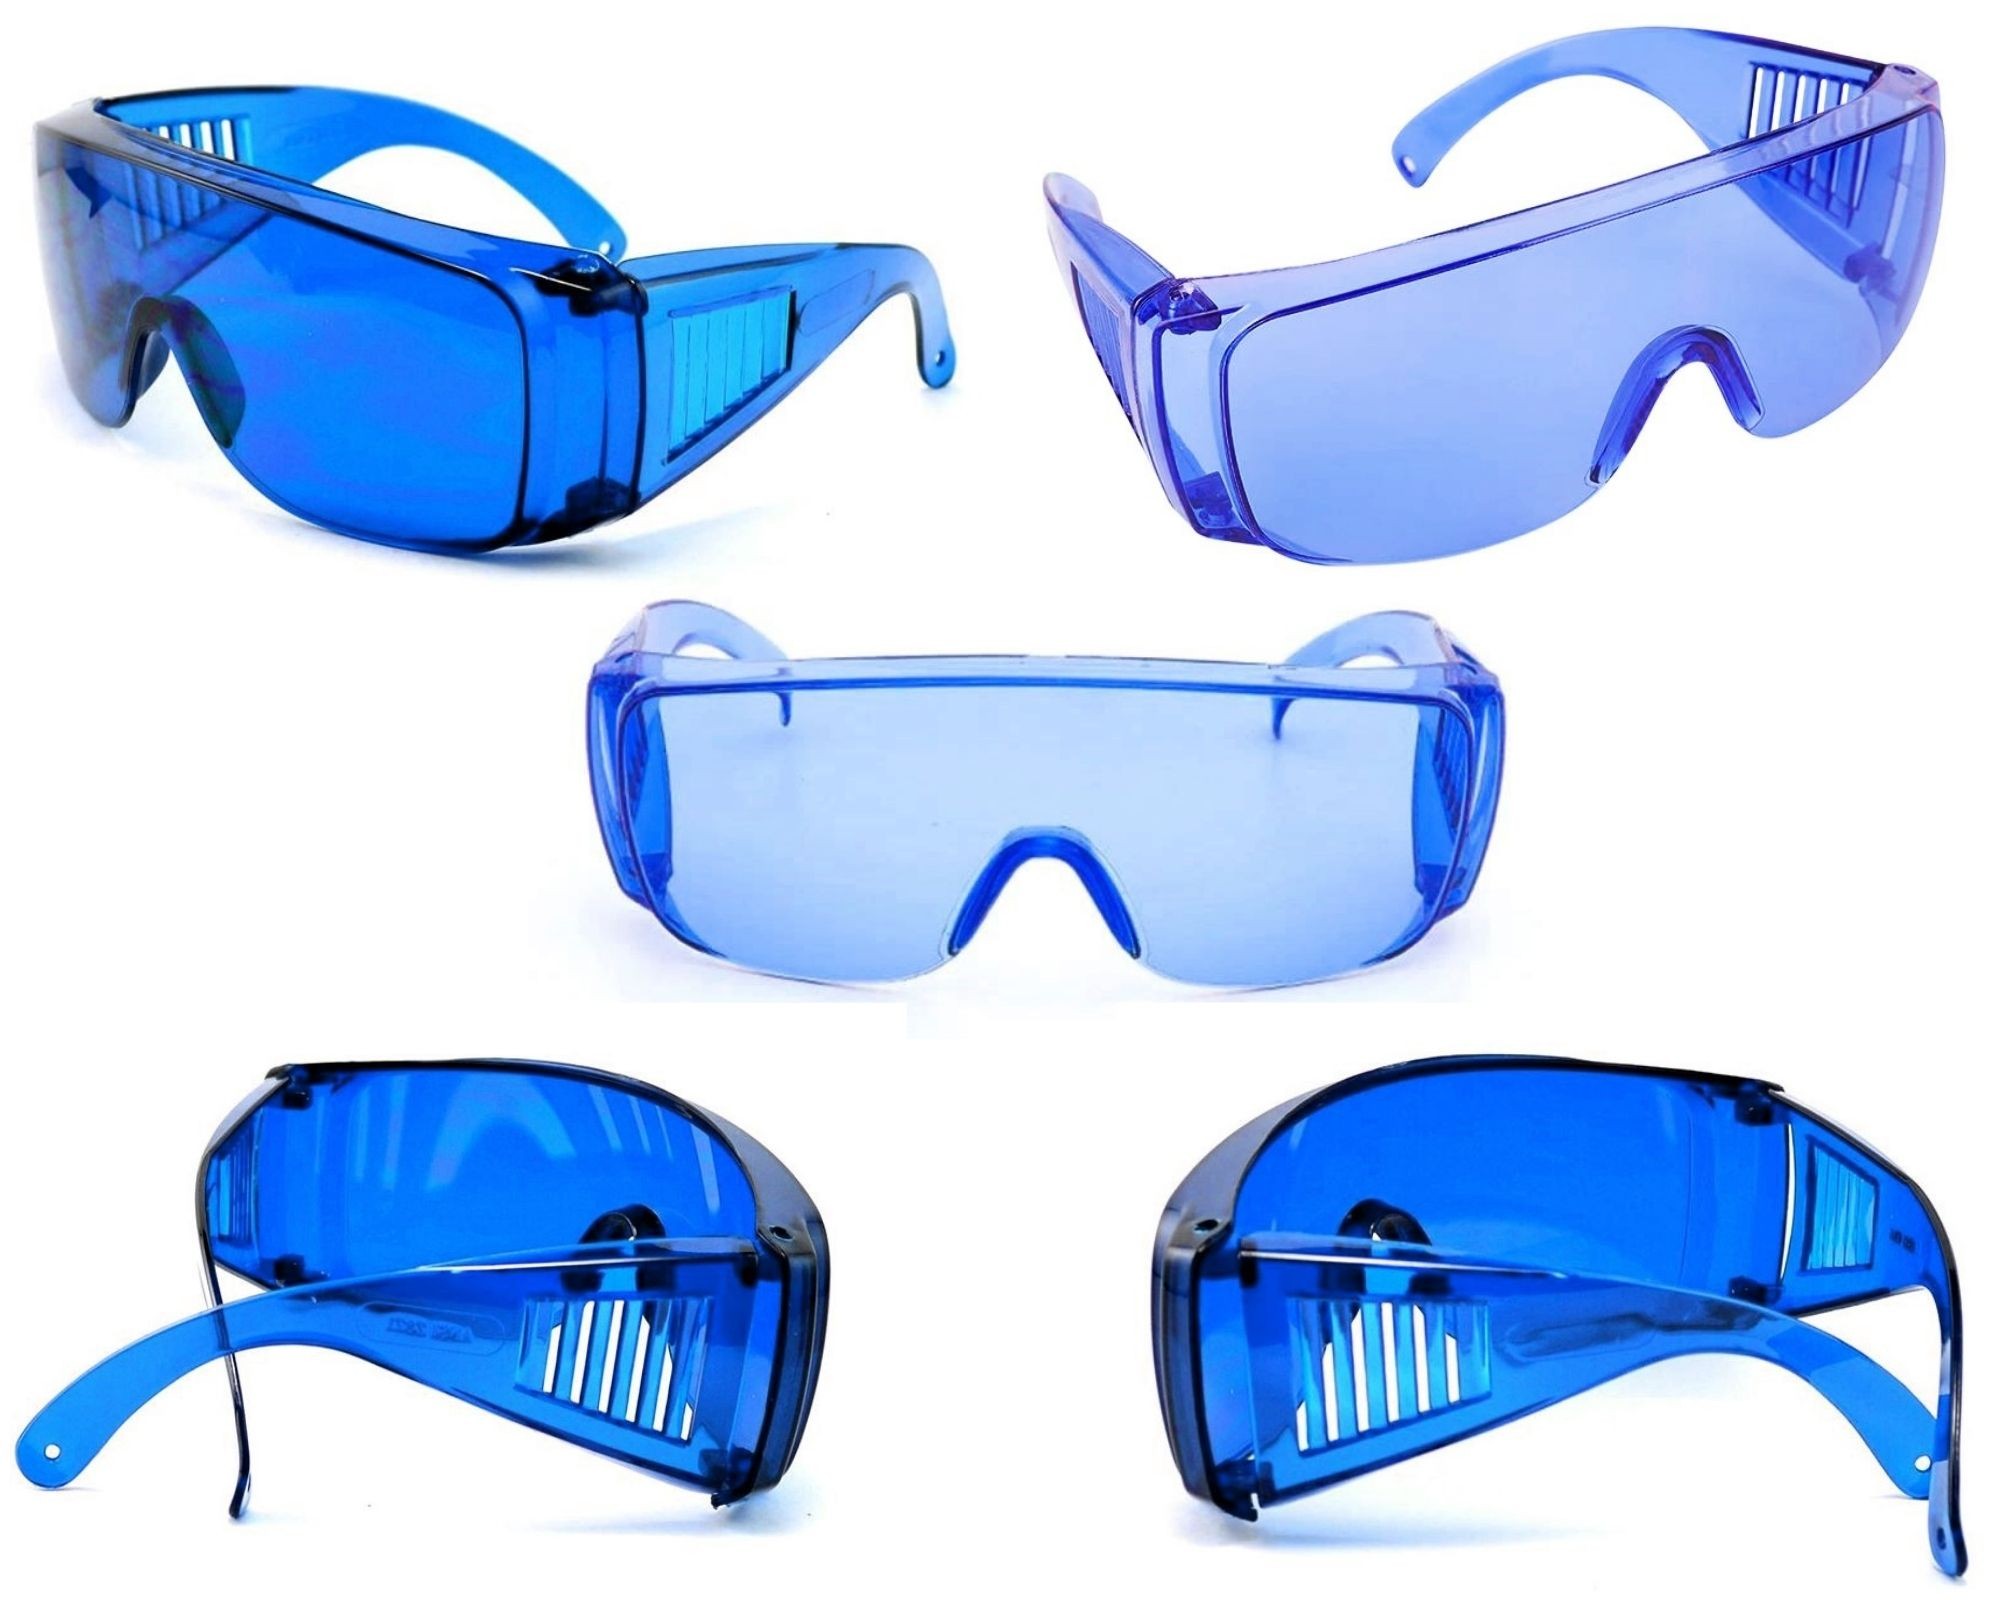  Okulary ochronne do lasera, gogle ochronne, okulary robocze, odporne na laser, BHP, przeciwodpryskoweKatalog  Products
